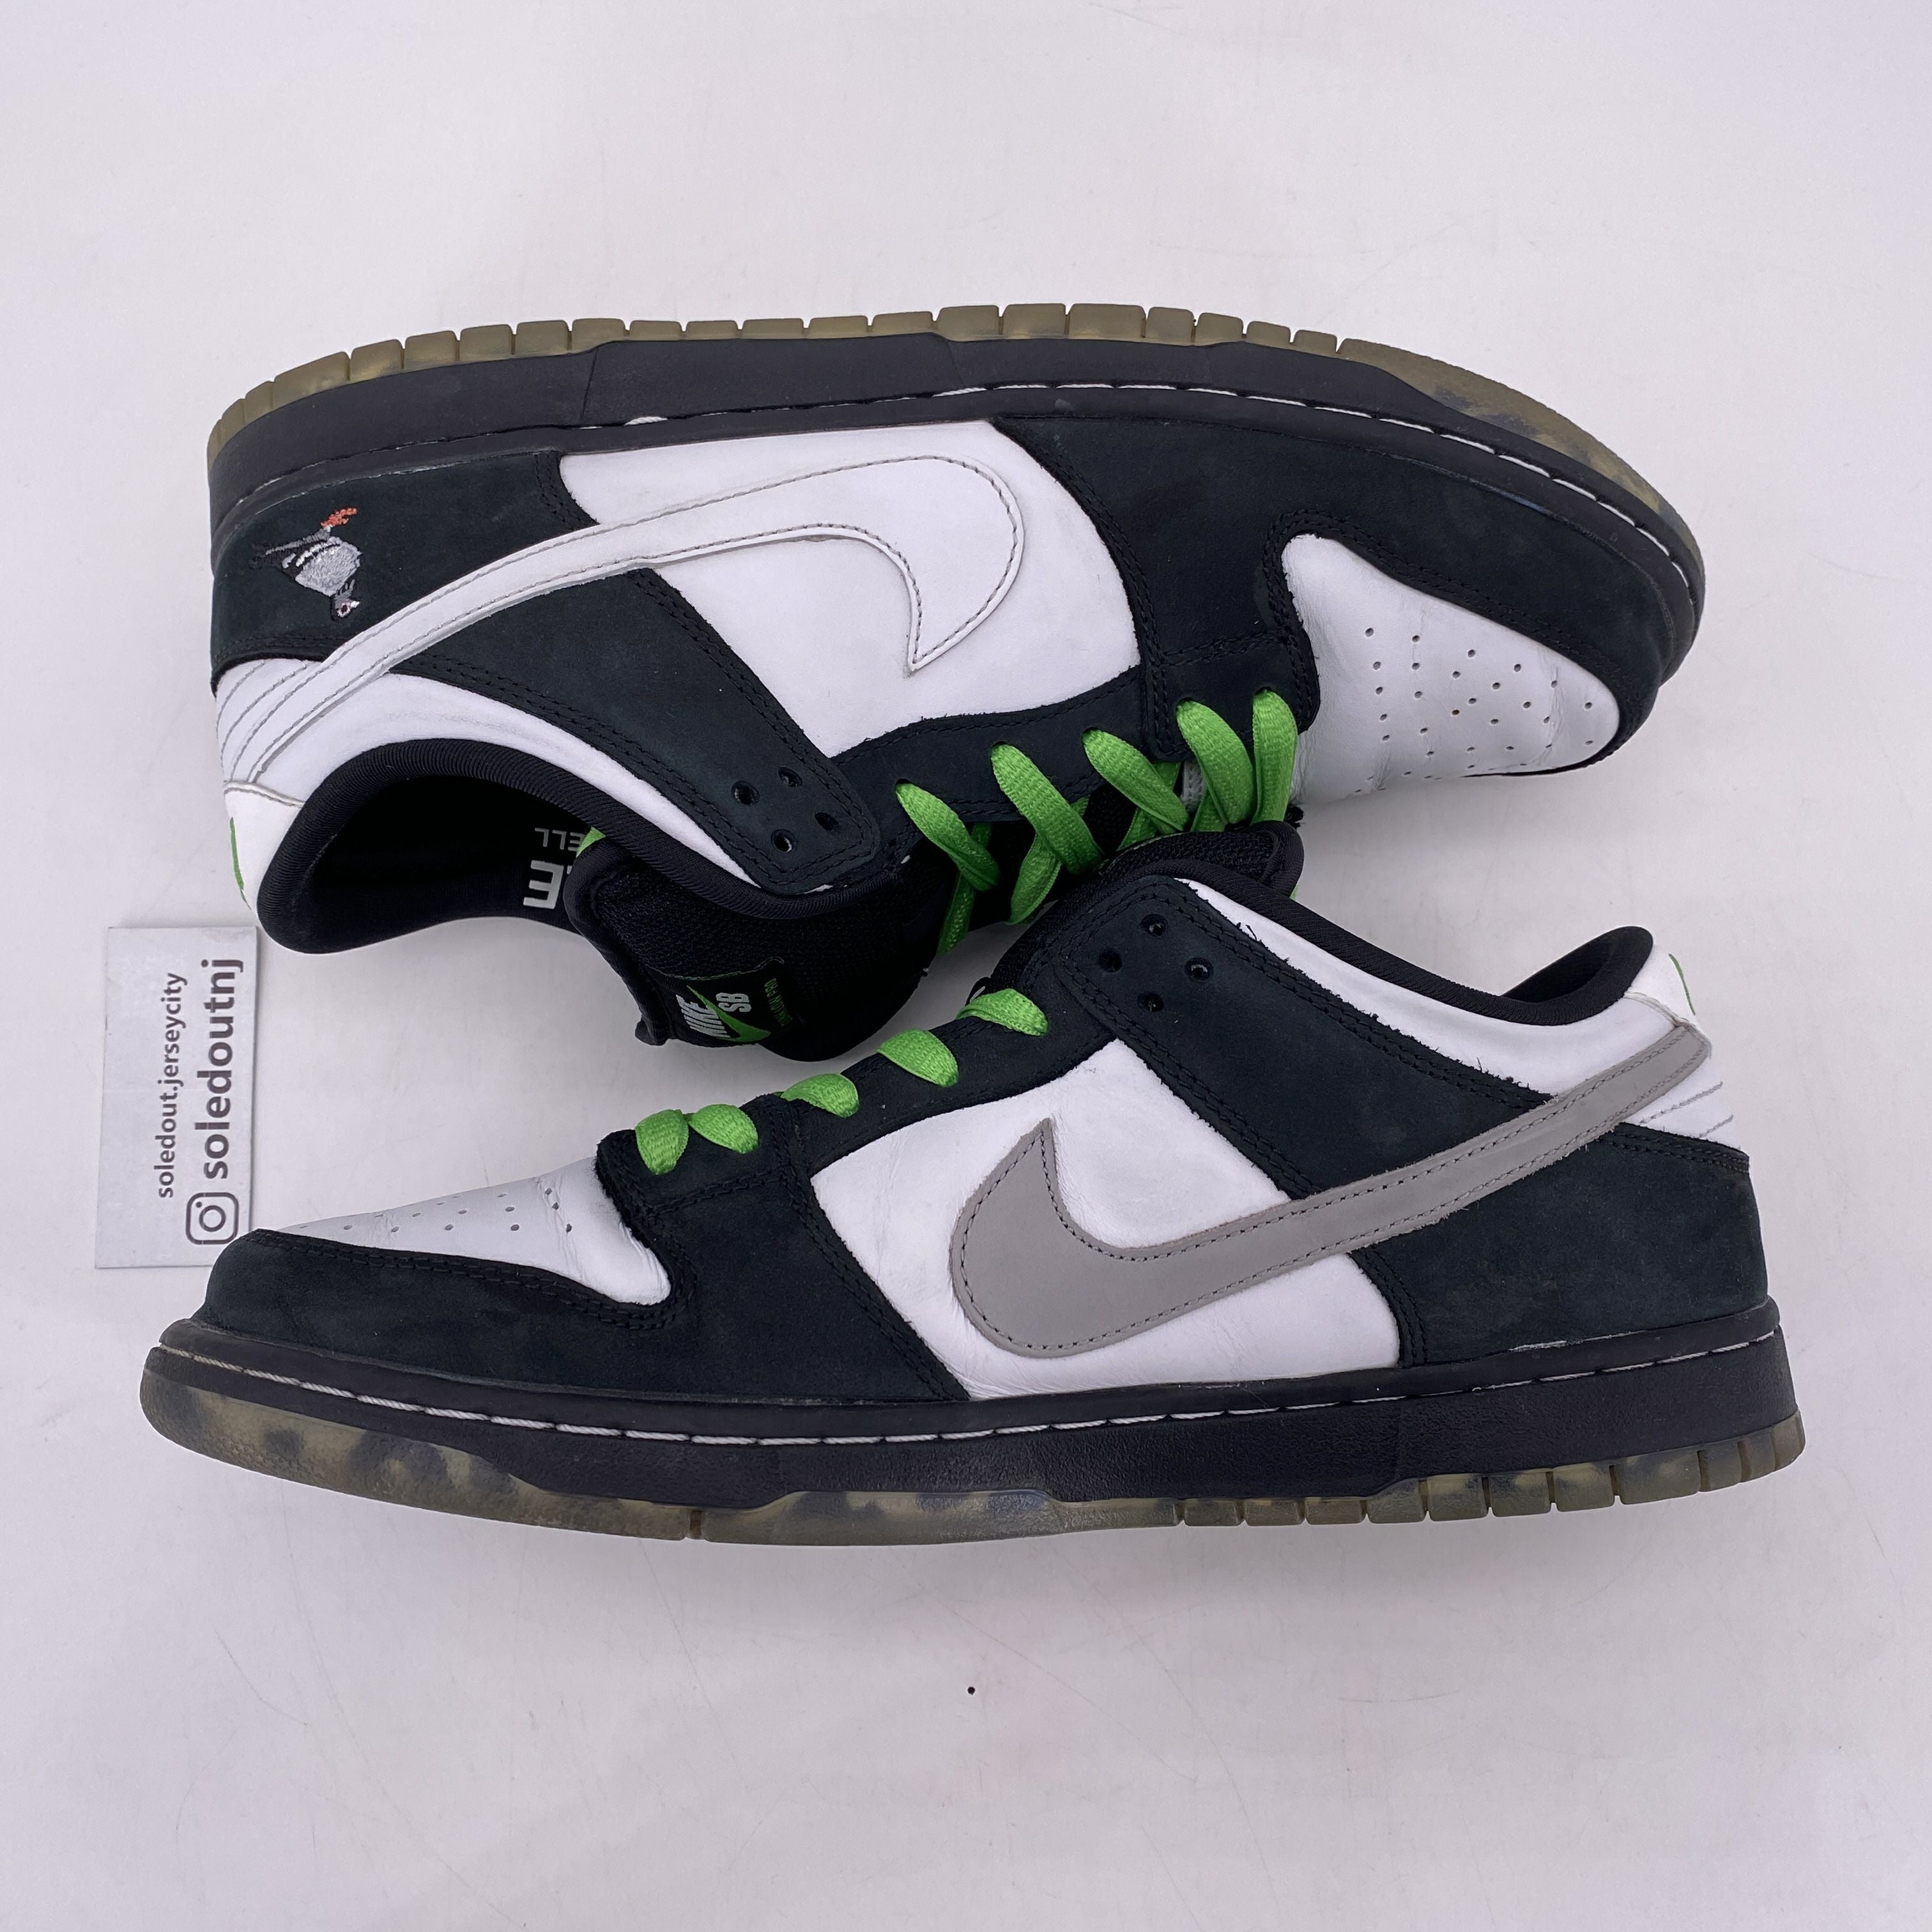 Nike cheapest nike air jordan shoes for women "Staple Panda Pigeon" 2019 Used Size 11